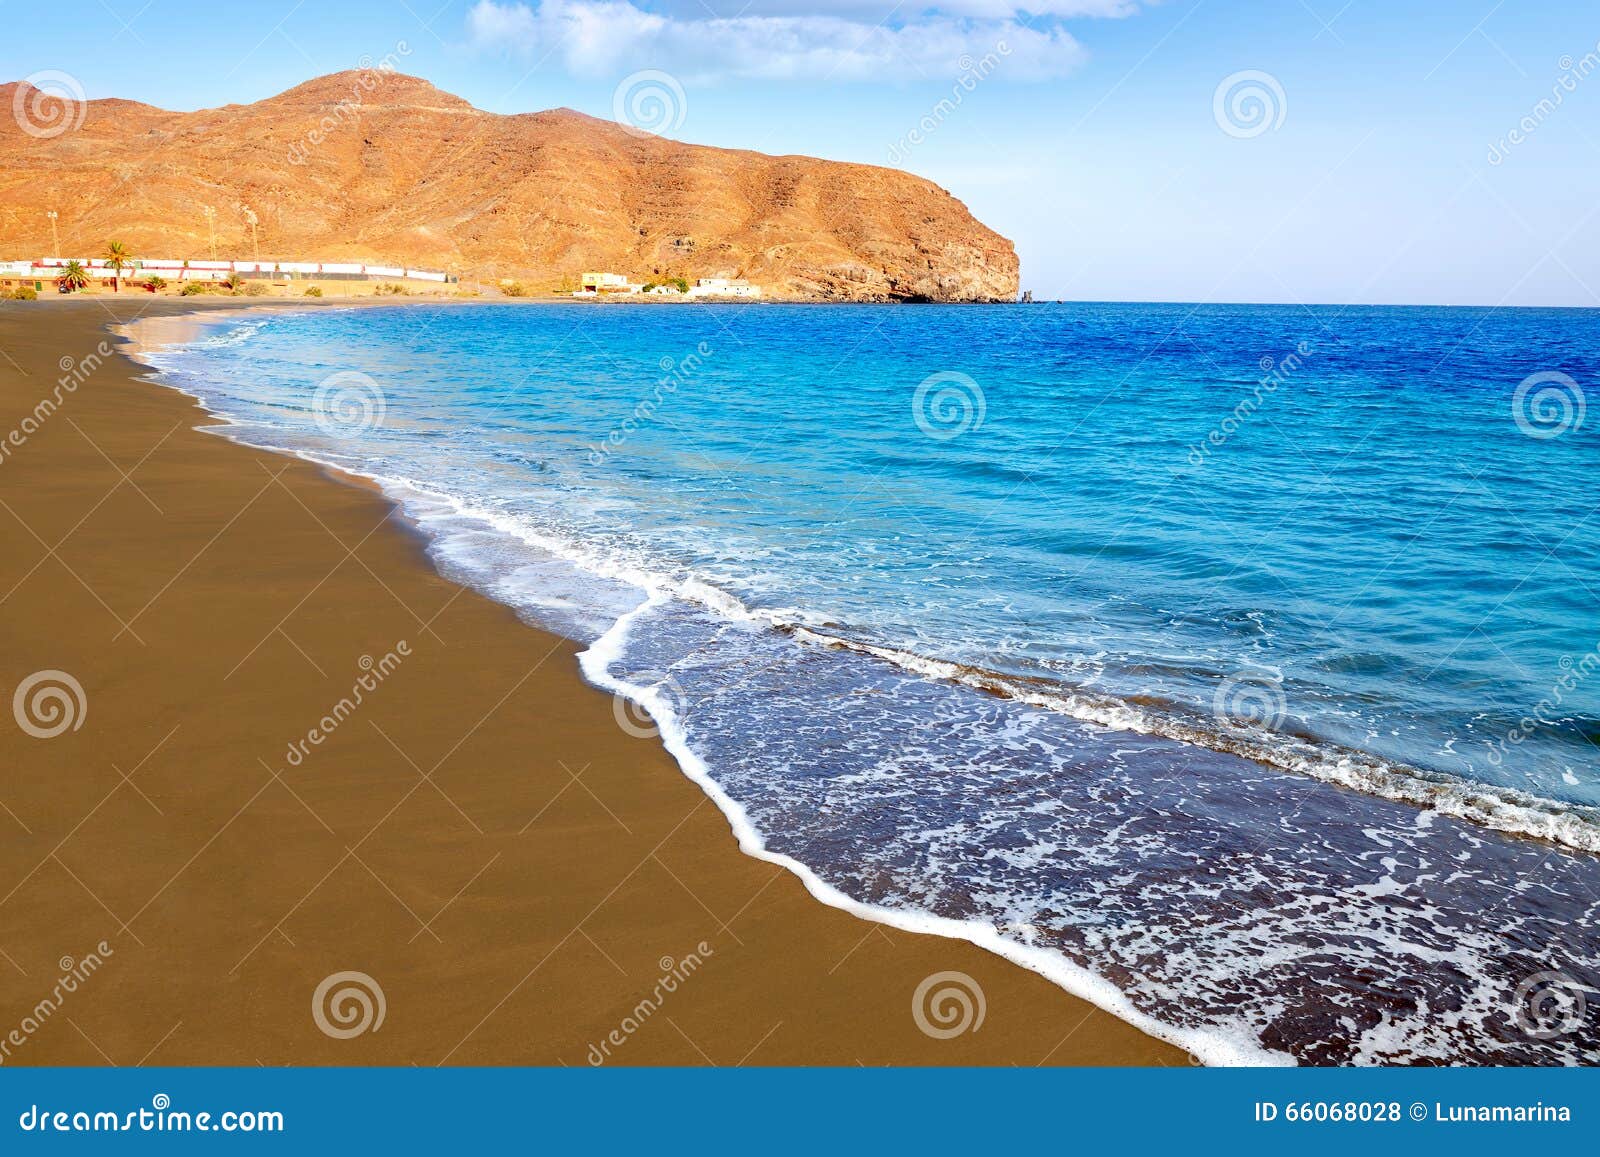 gran tarajal beach fuerteventura canary islands